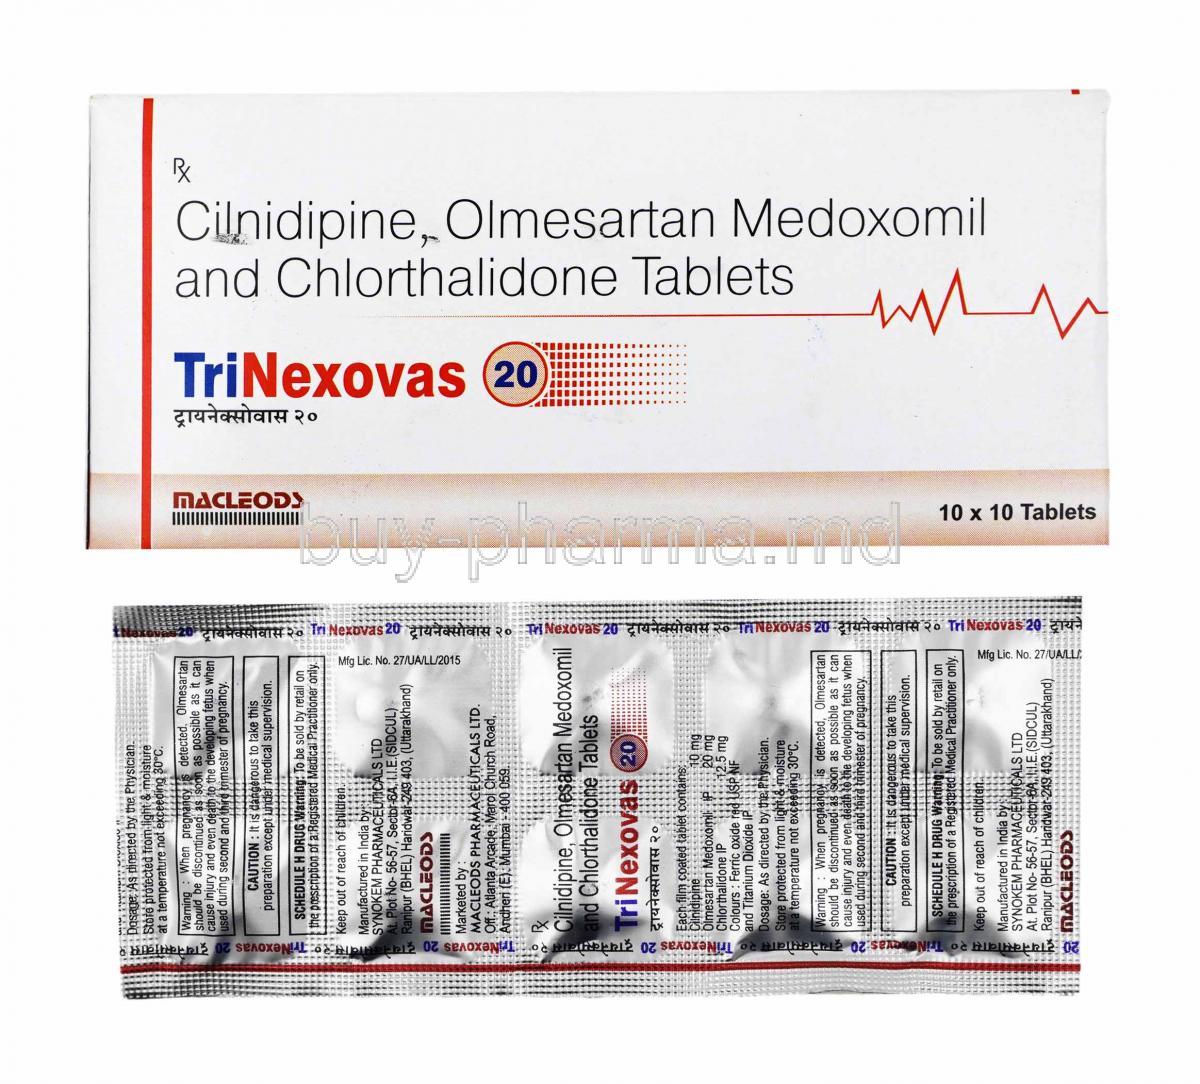 Trinexovas, Olmesartan, Cilnidipine and Chlorthalidone 20mg box and tablets